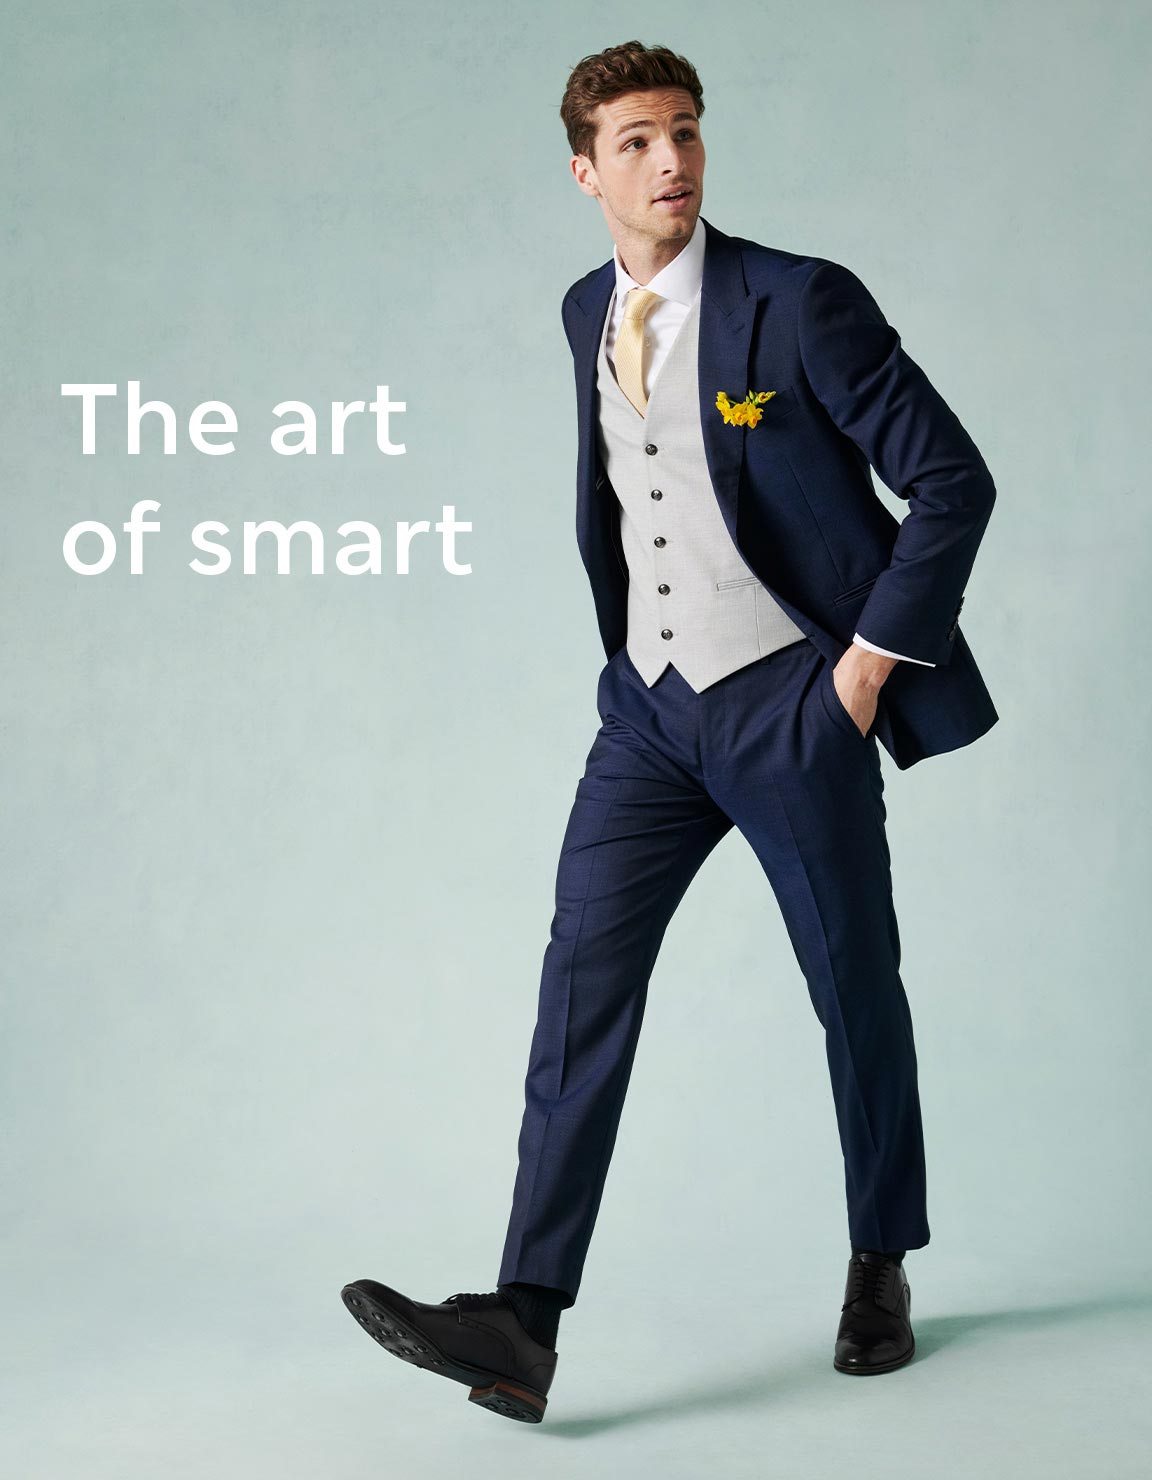 The art of smart